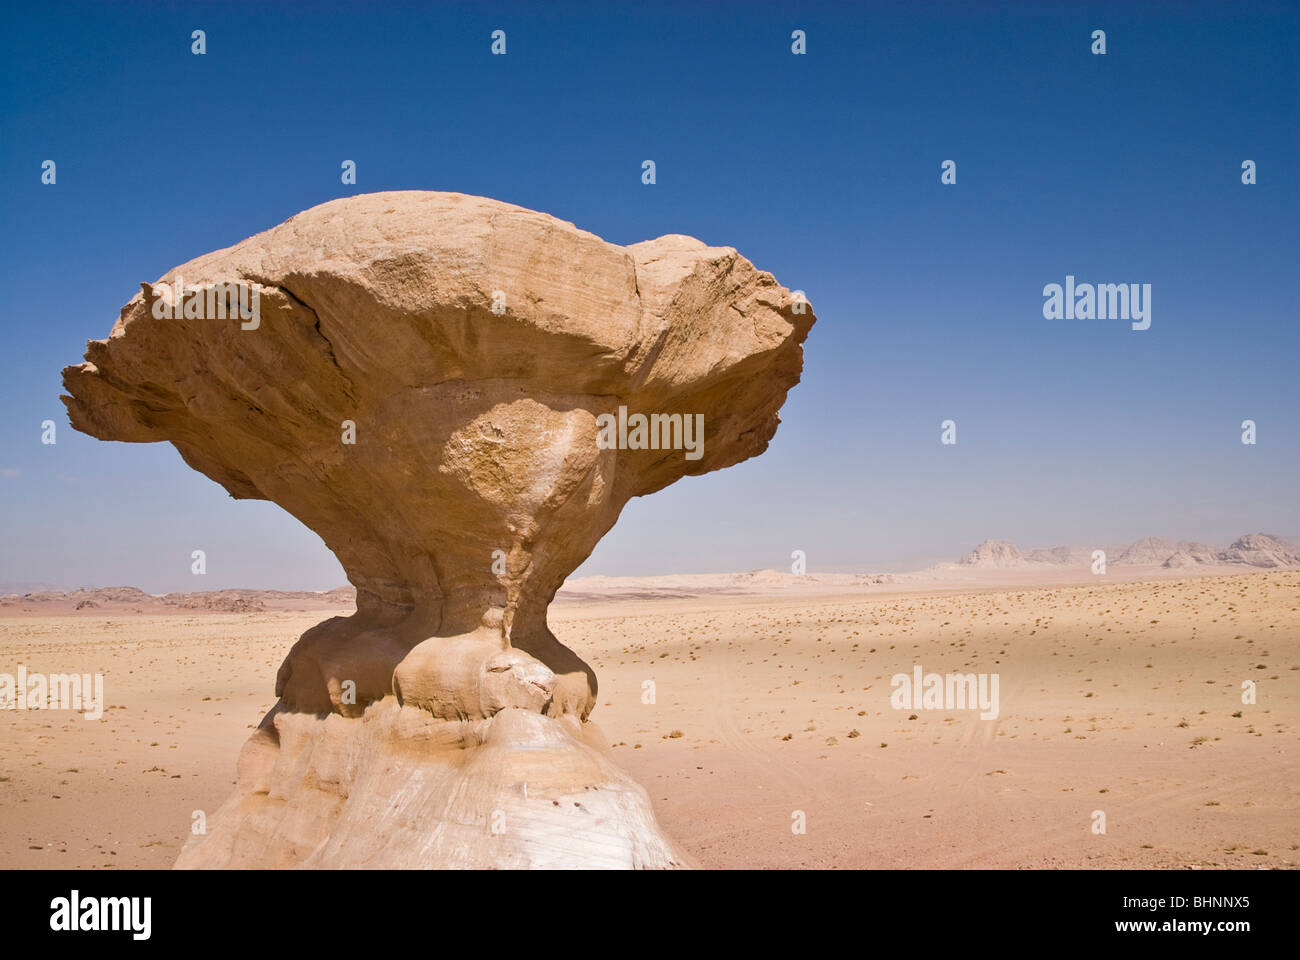 Mushroom rock, desert landscape, Wadi Rum, Jordan, Asia. Stock Photo